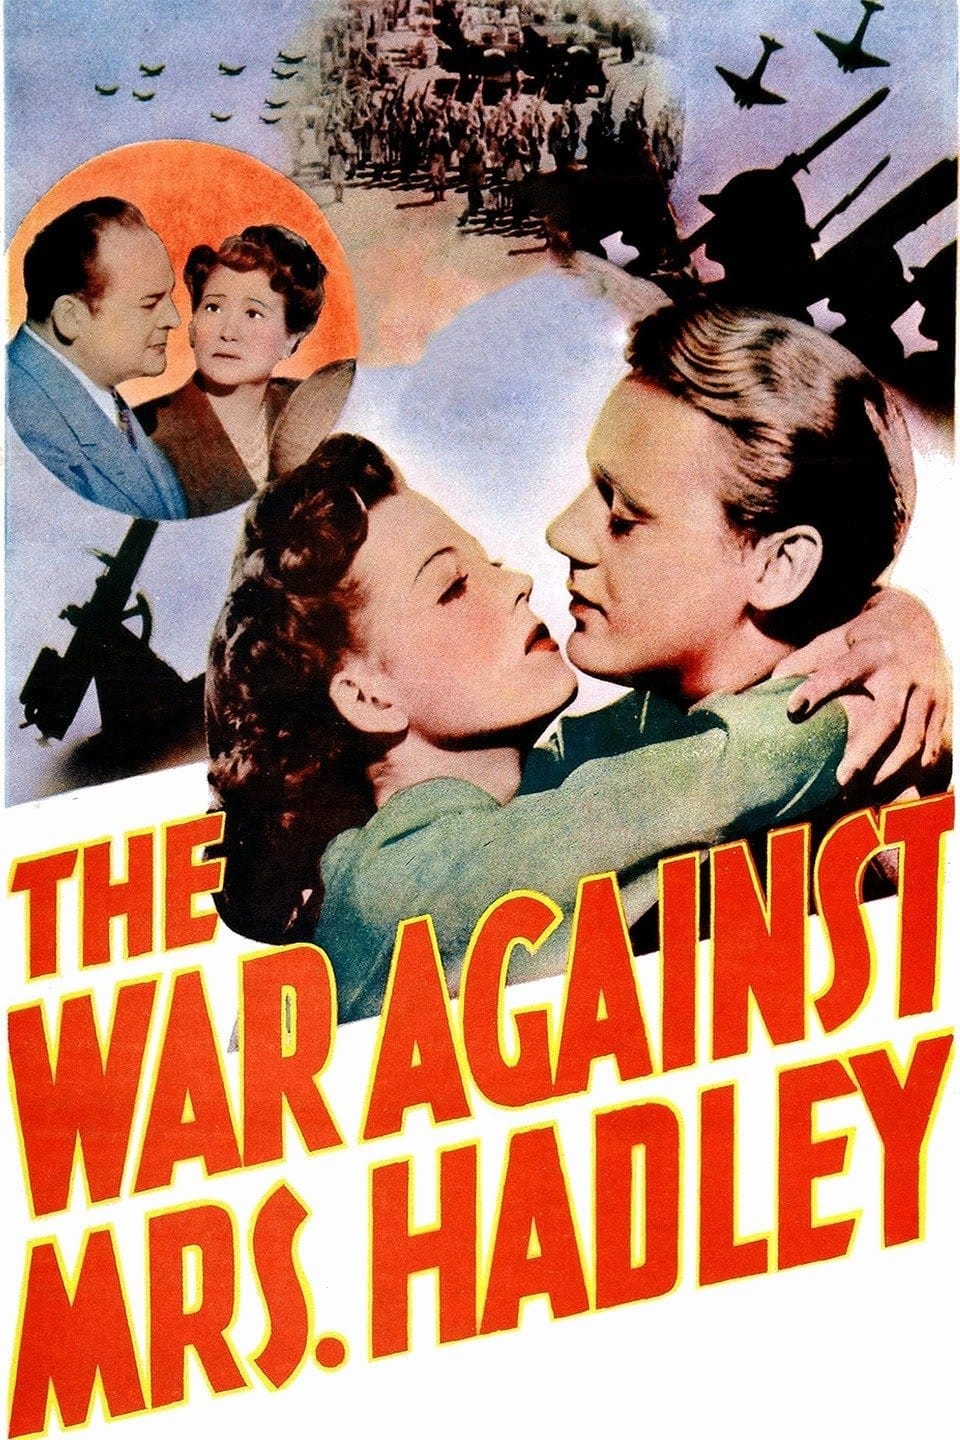 The War Against Mrs. Hadley (1942)